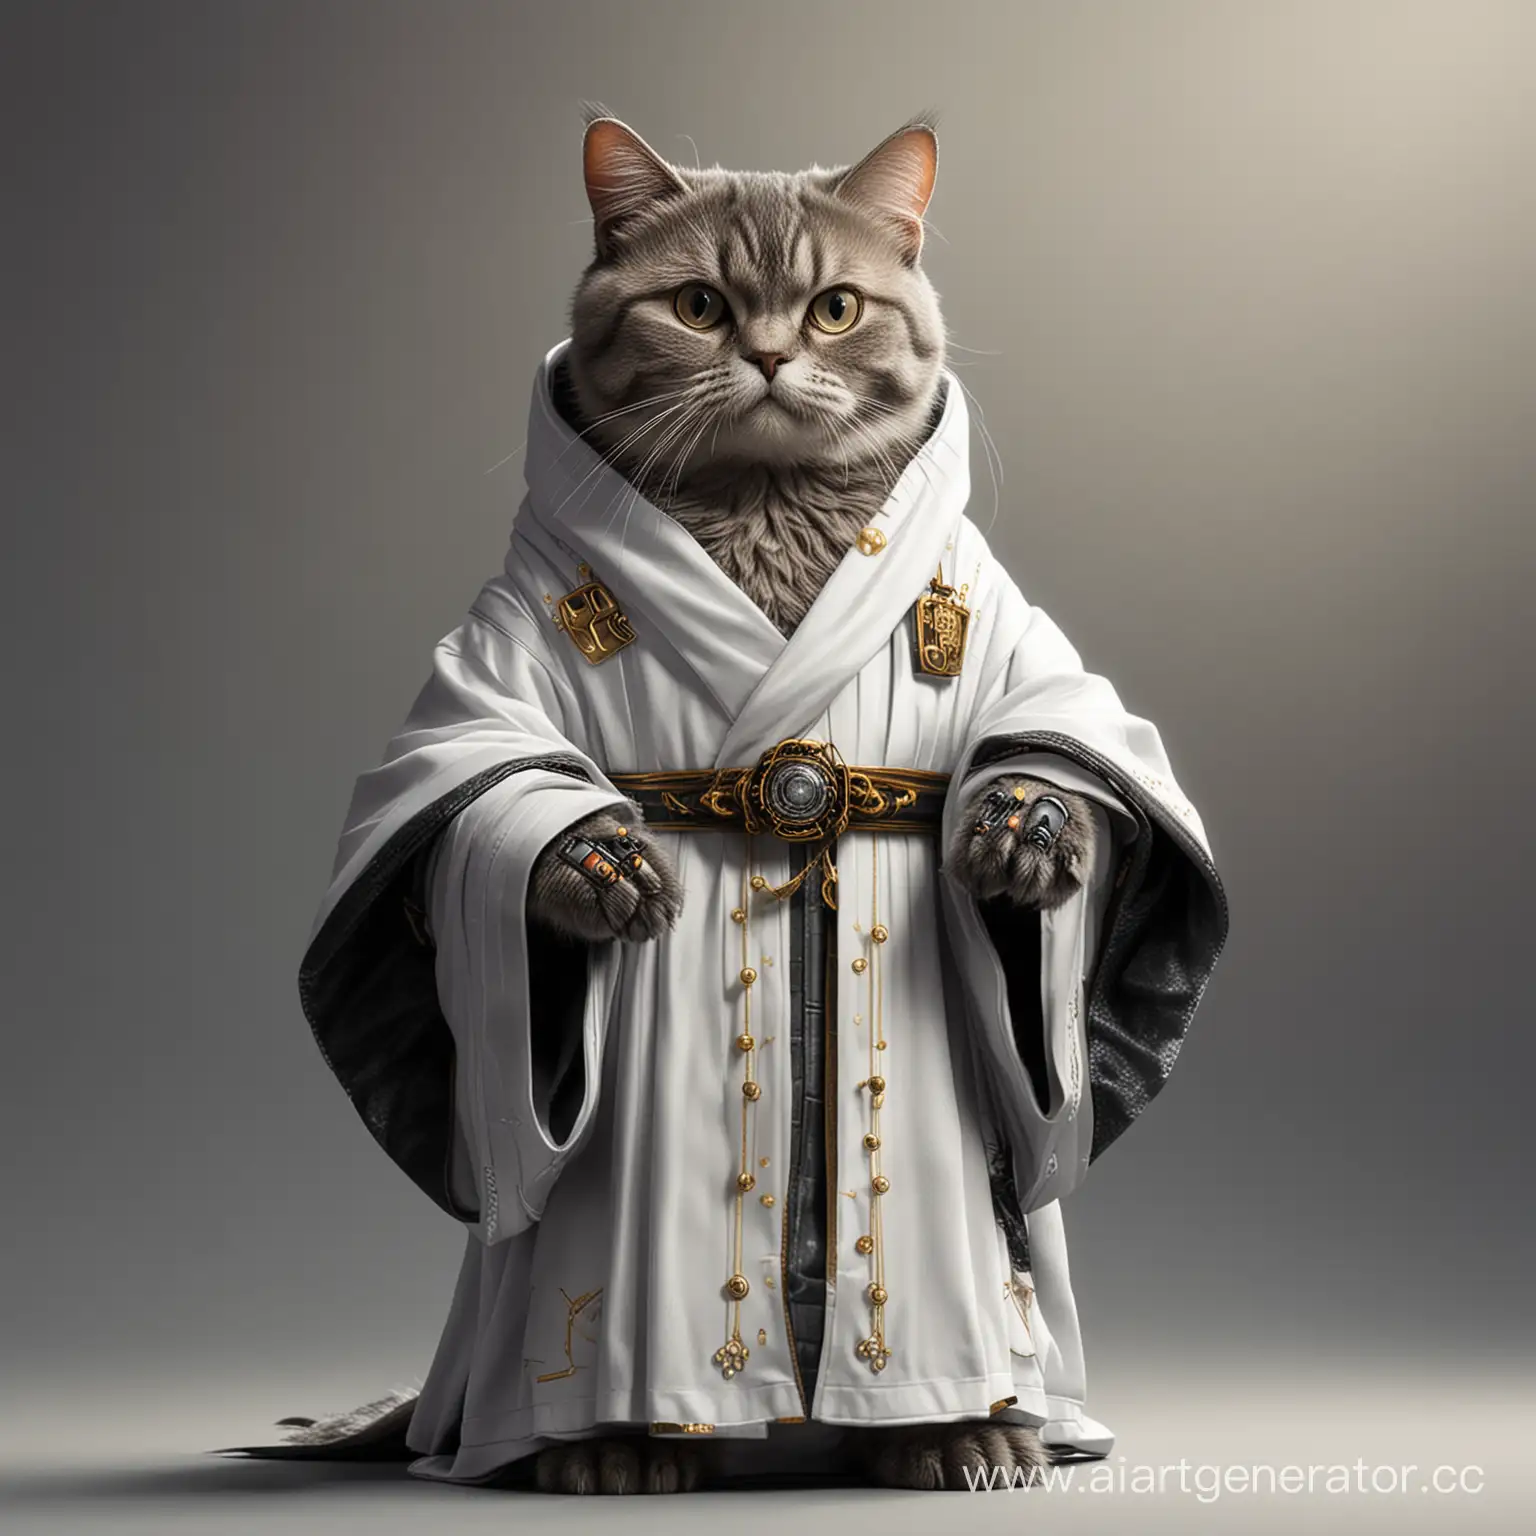 Robotic-Cat-Dressed-as-a-Judge